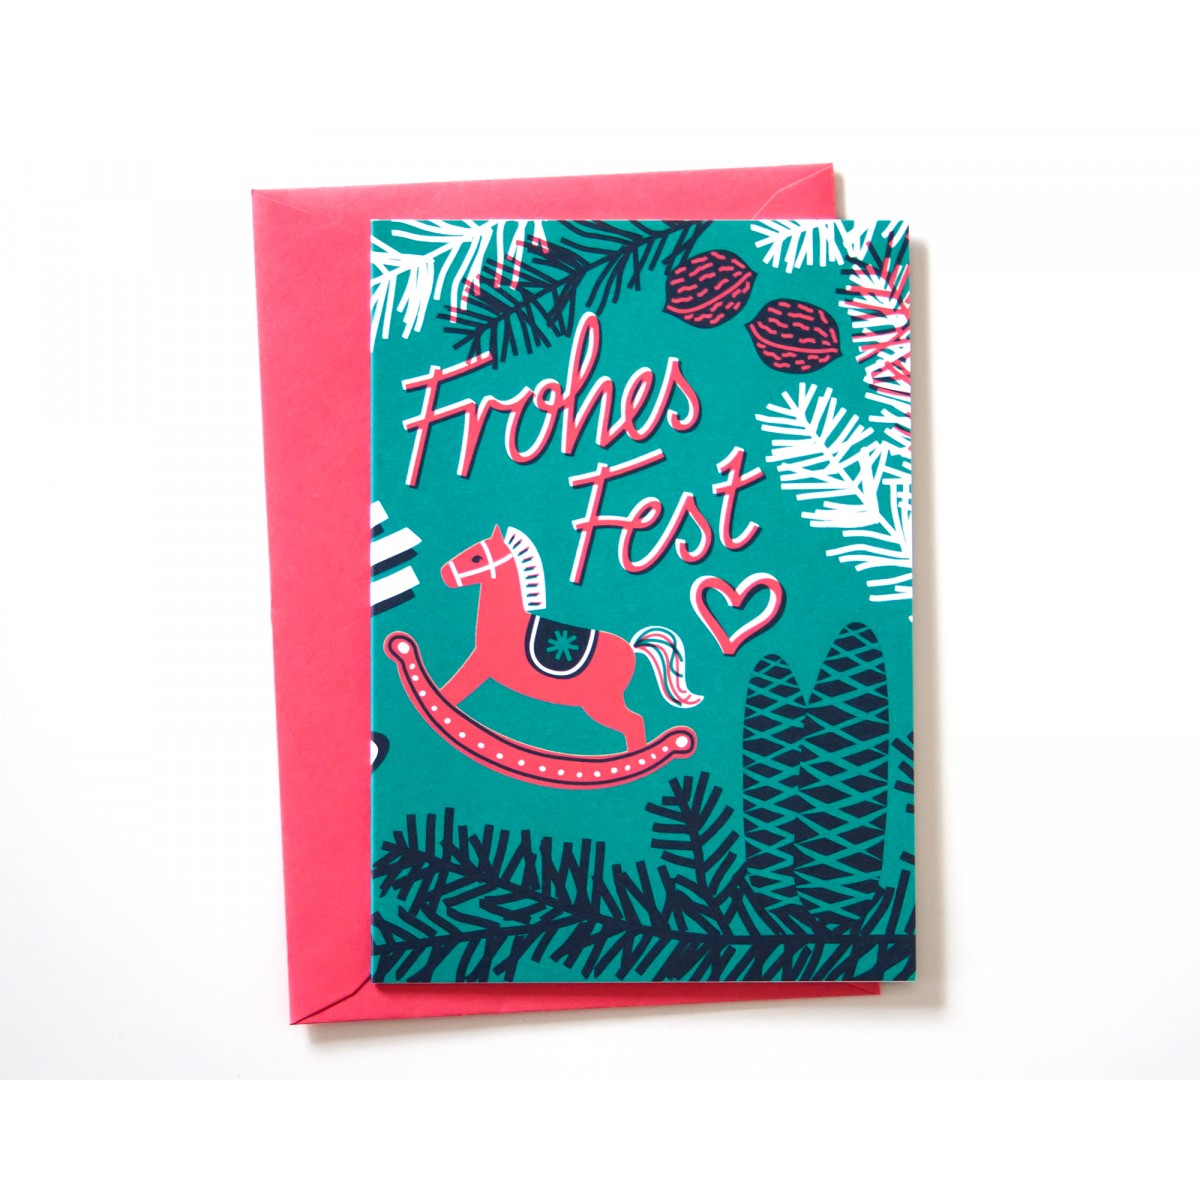 Weihnachtskarte »Frohes Fest« türkis/pink // Papaya paper products